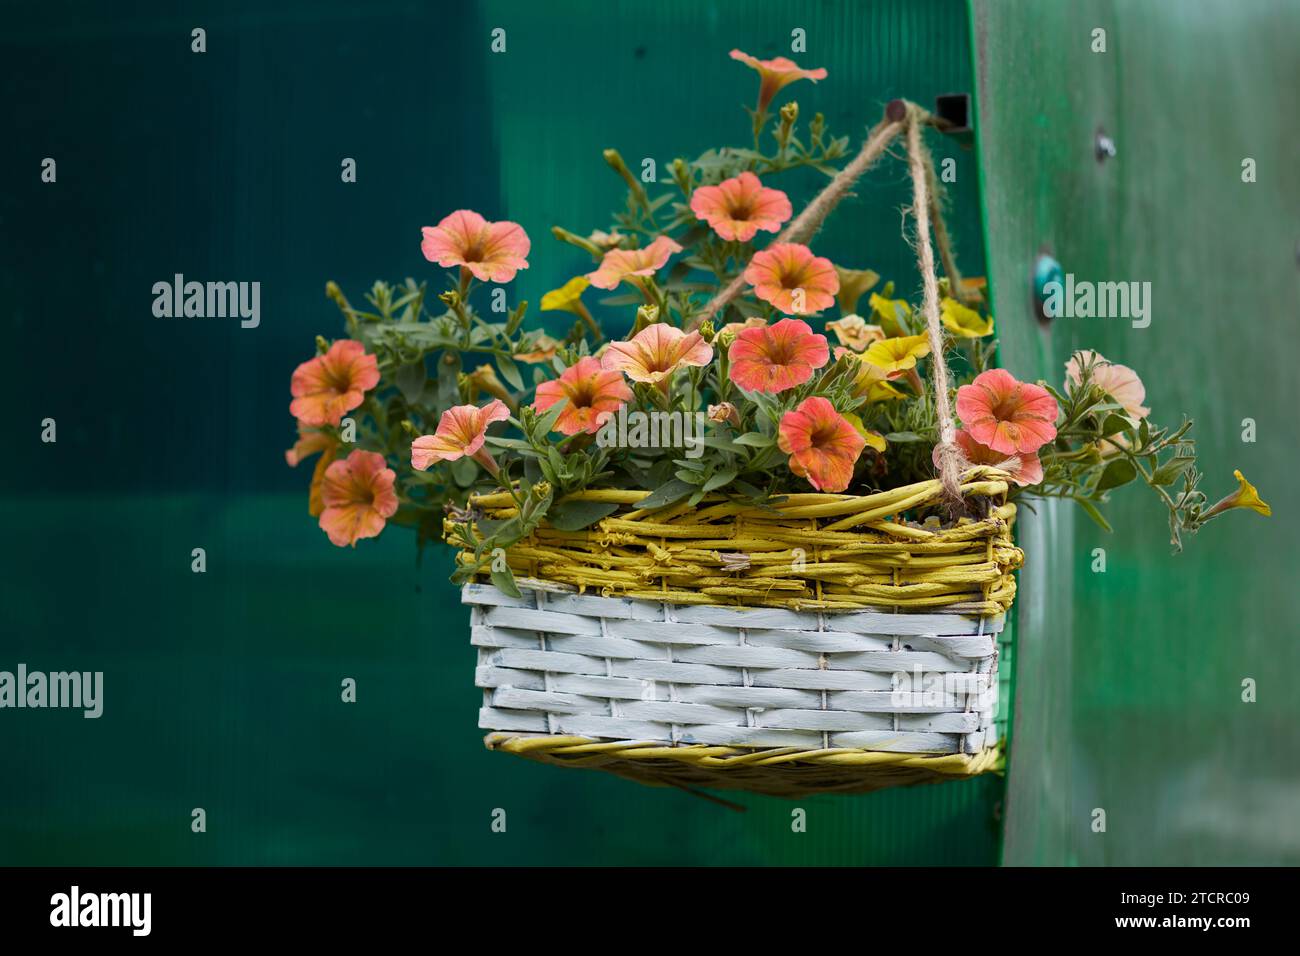 Garden petunia (Petunia × atkinsiana) flowering in a hanging wicker basket. Stock Photo